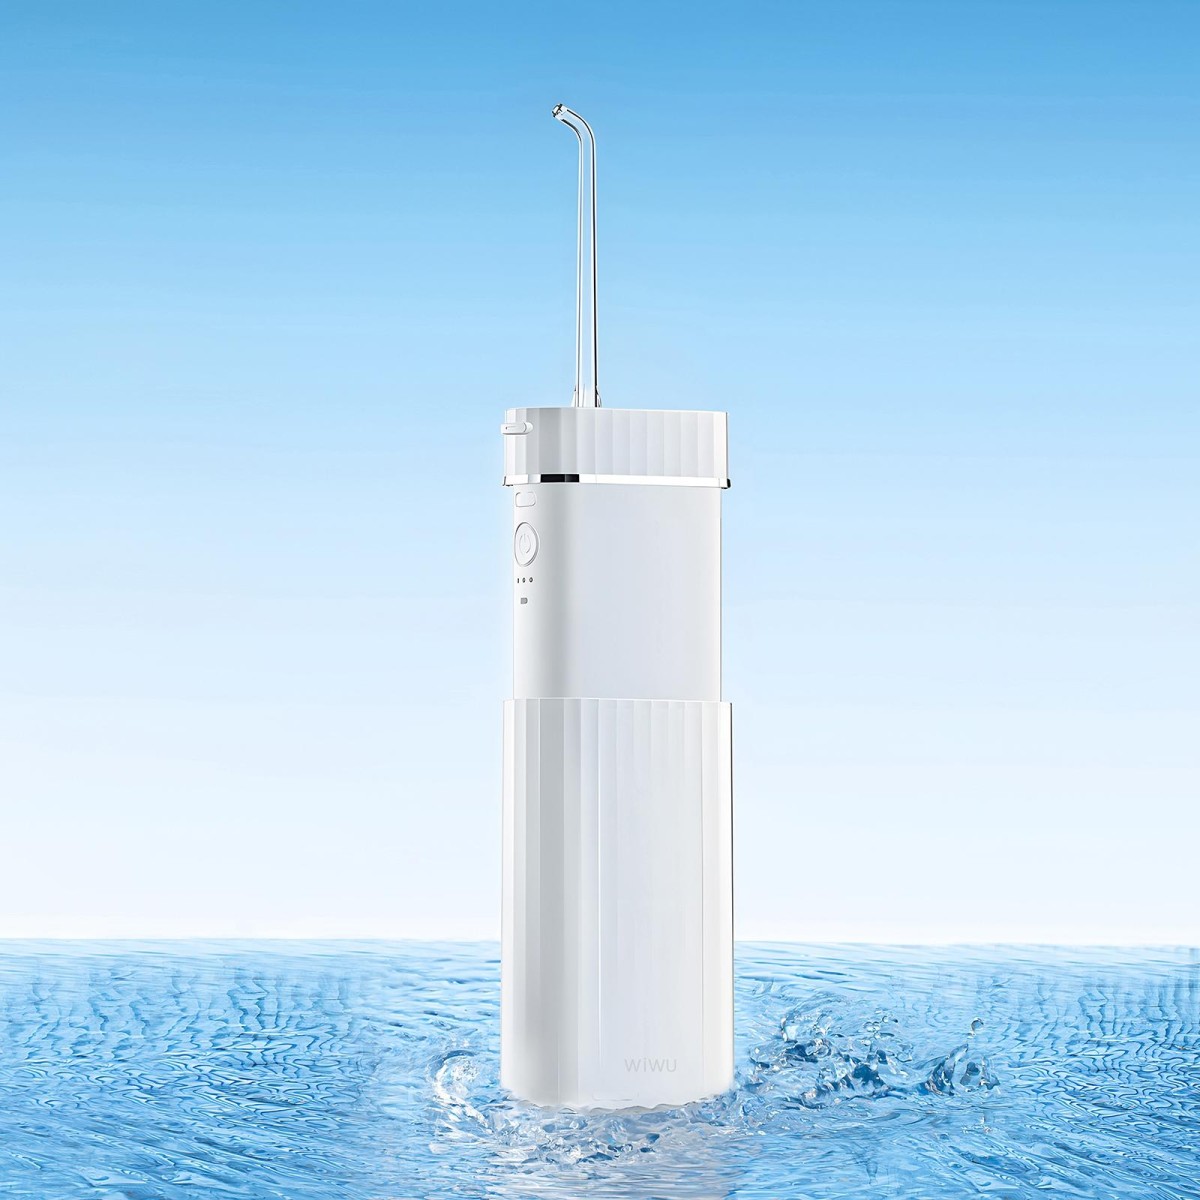 WIWU Wi-TP001 Yajie Portable Teeth Irrigator(White)